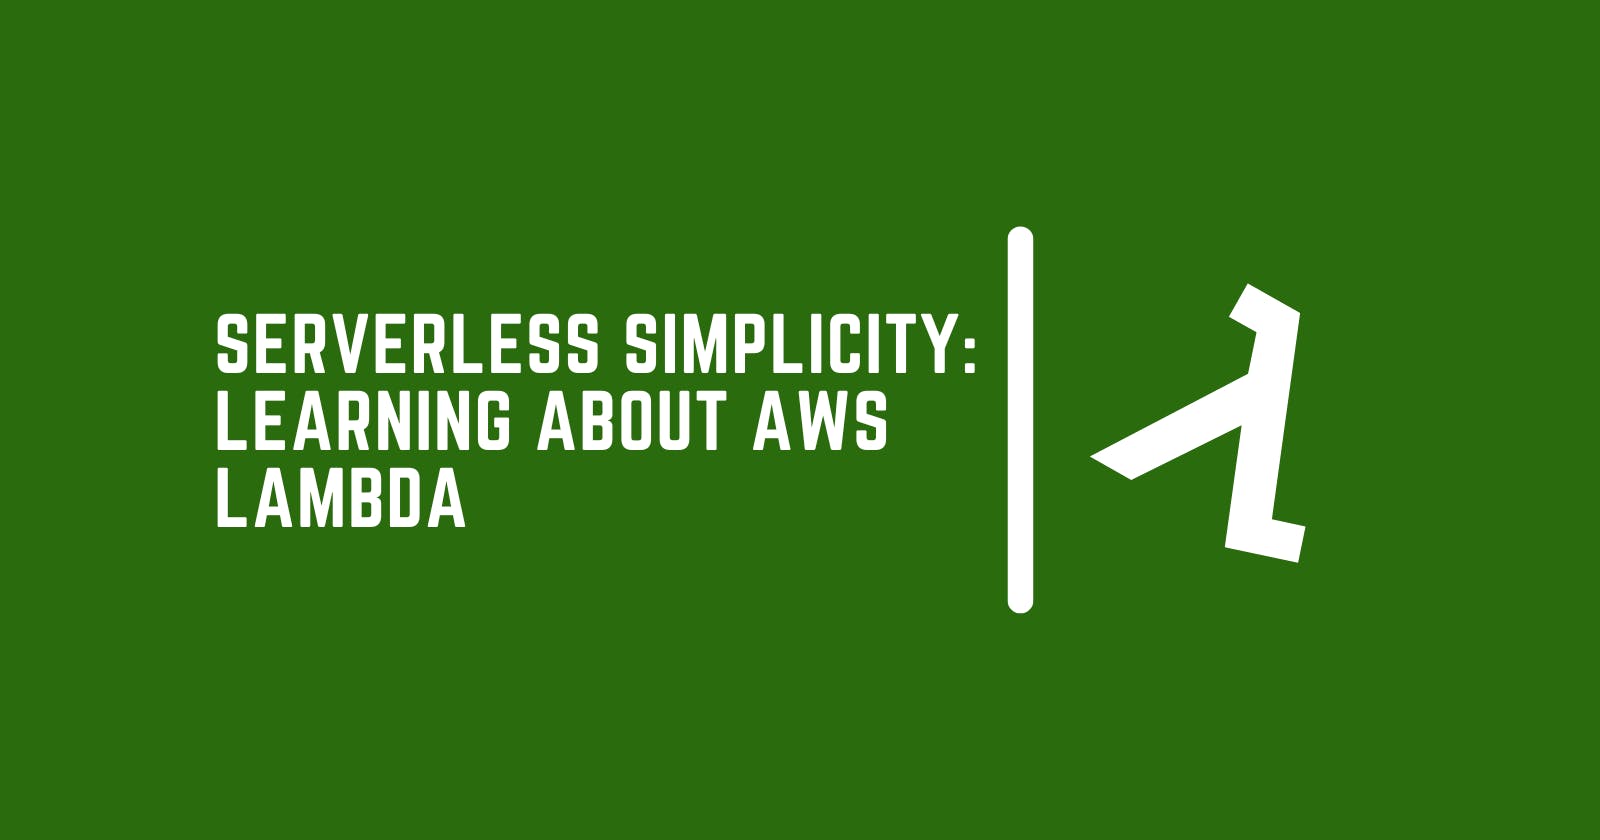 Serverless Simplicity: Learning about AWS Lambda